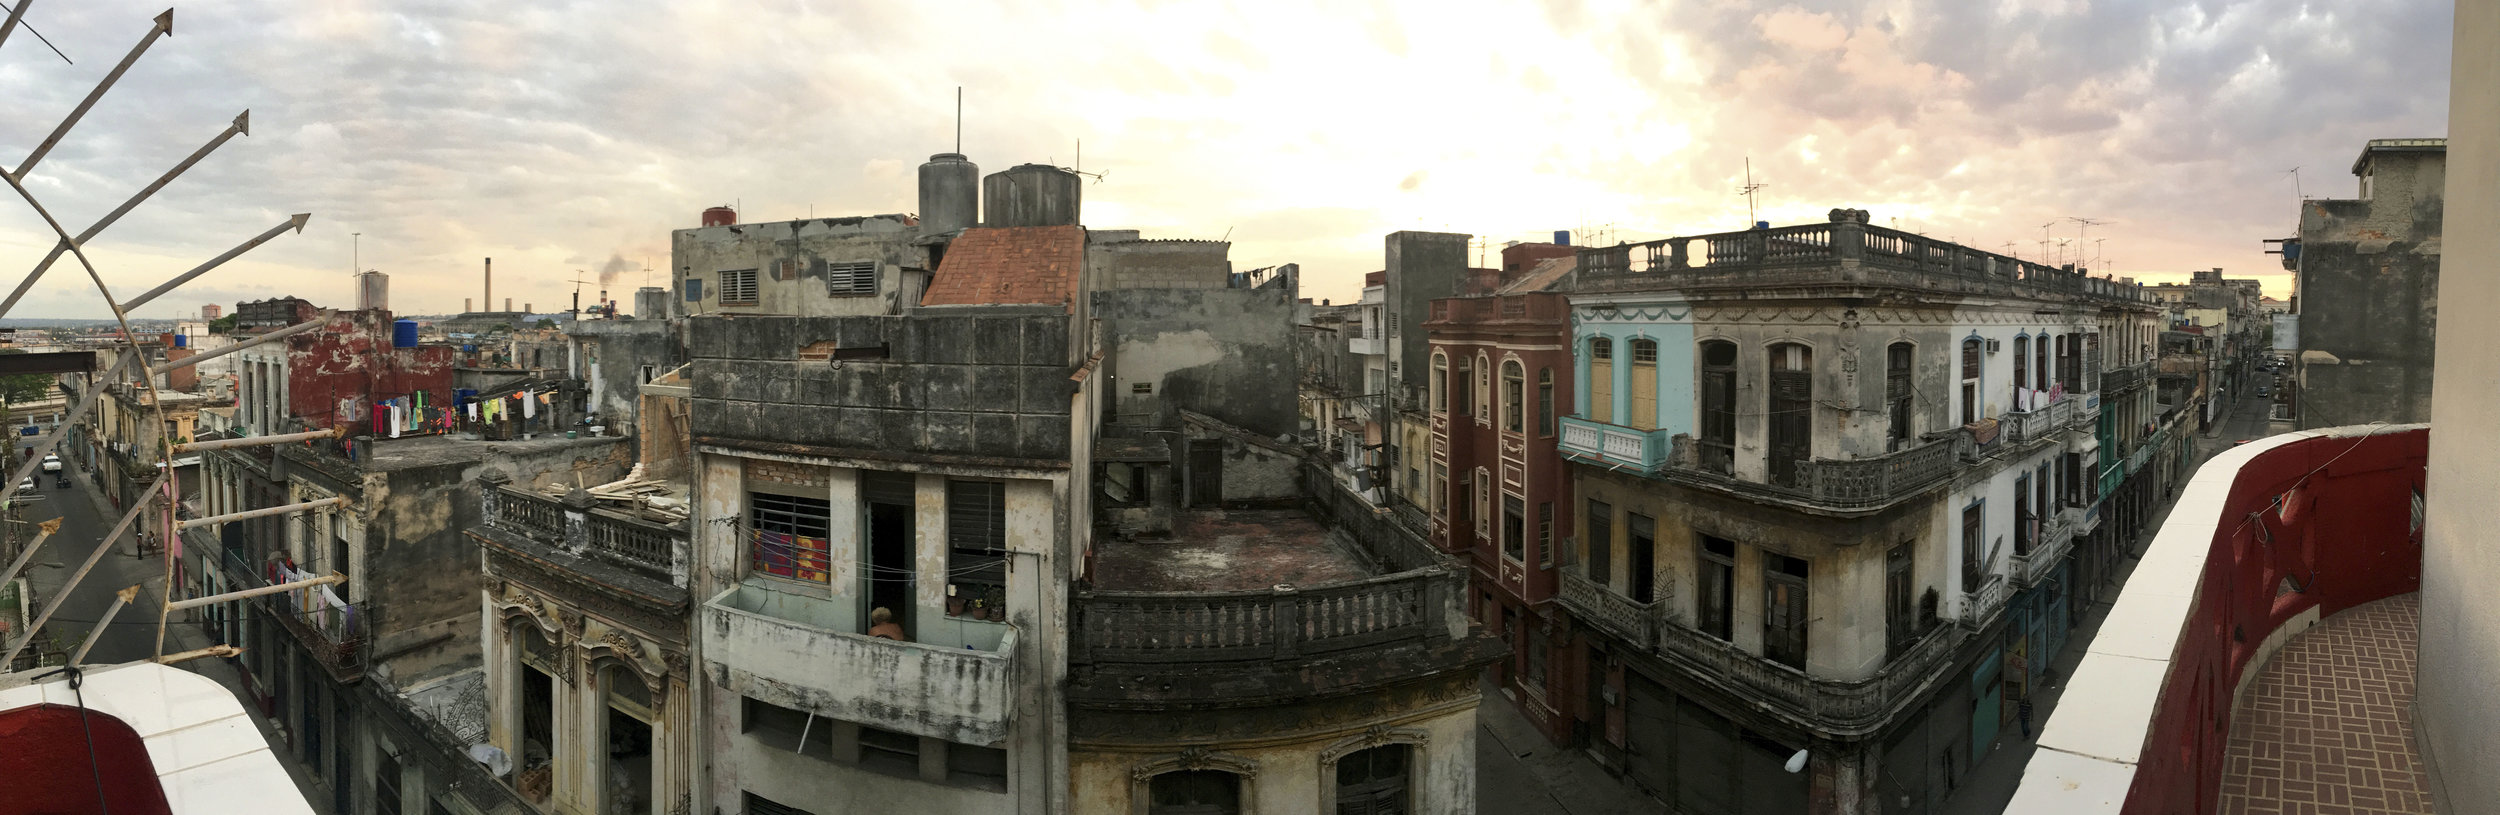 Cuba- Havana- Balcony view from Air BnB